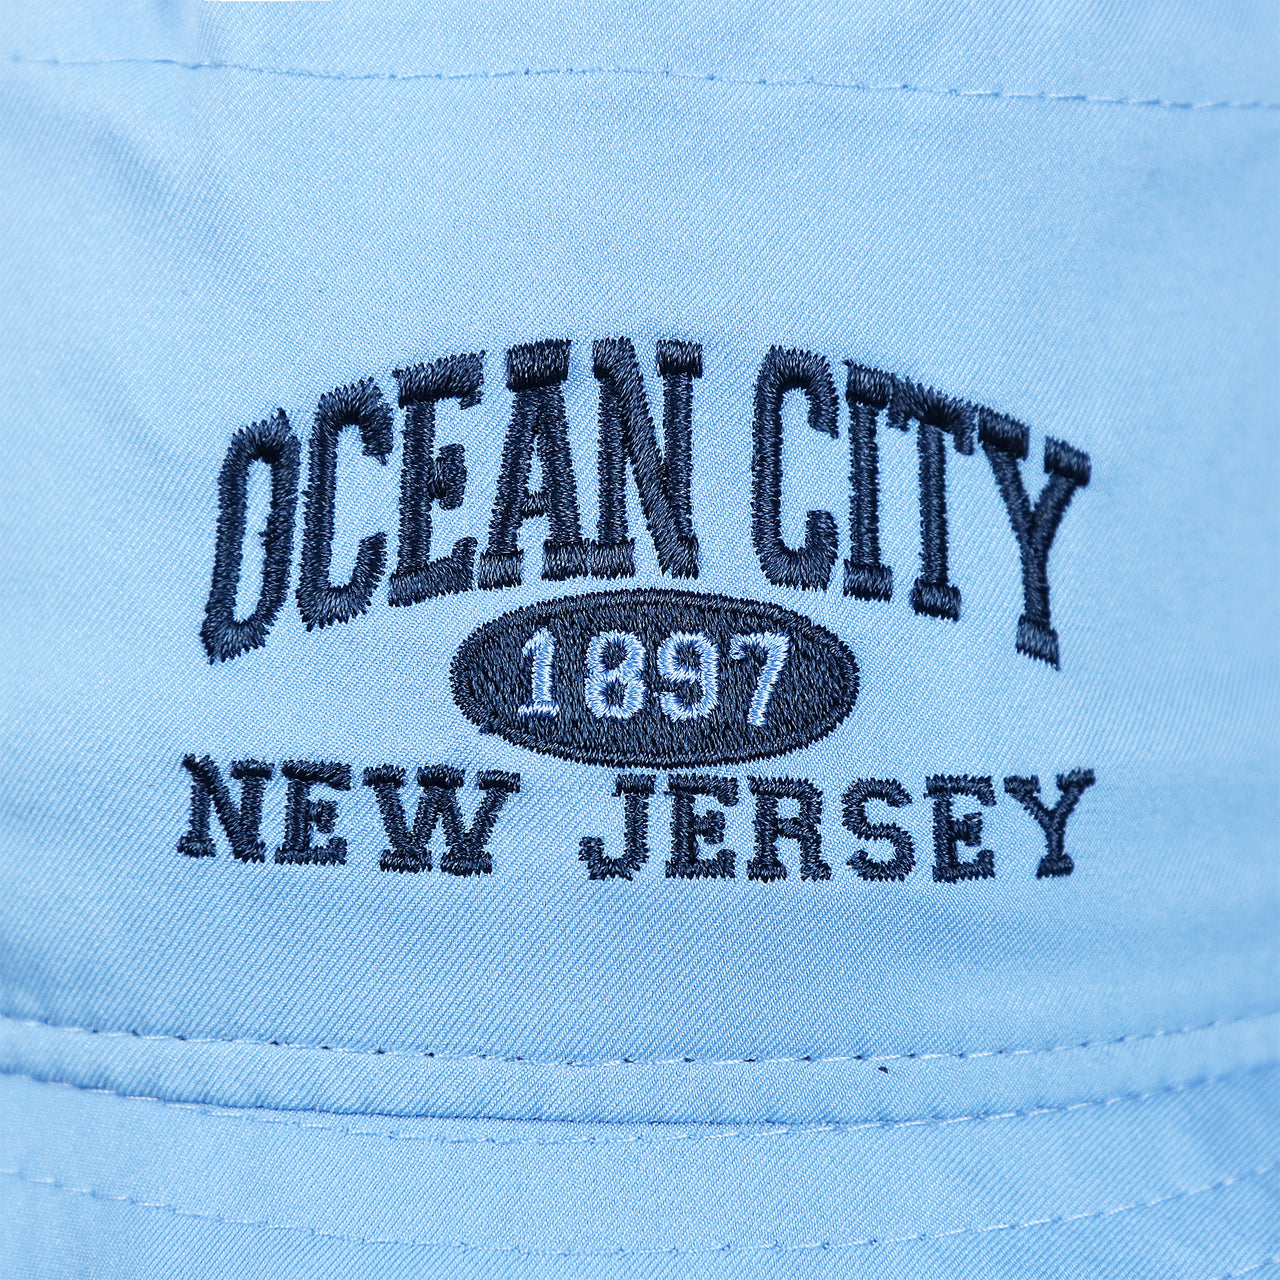 The Ocean City New Jersey Wordmark on the Ocean City New Jersey 1897 Bucket Hat | Light Blue Bucket Hat